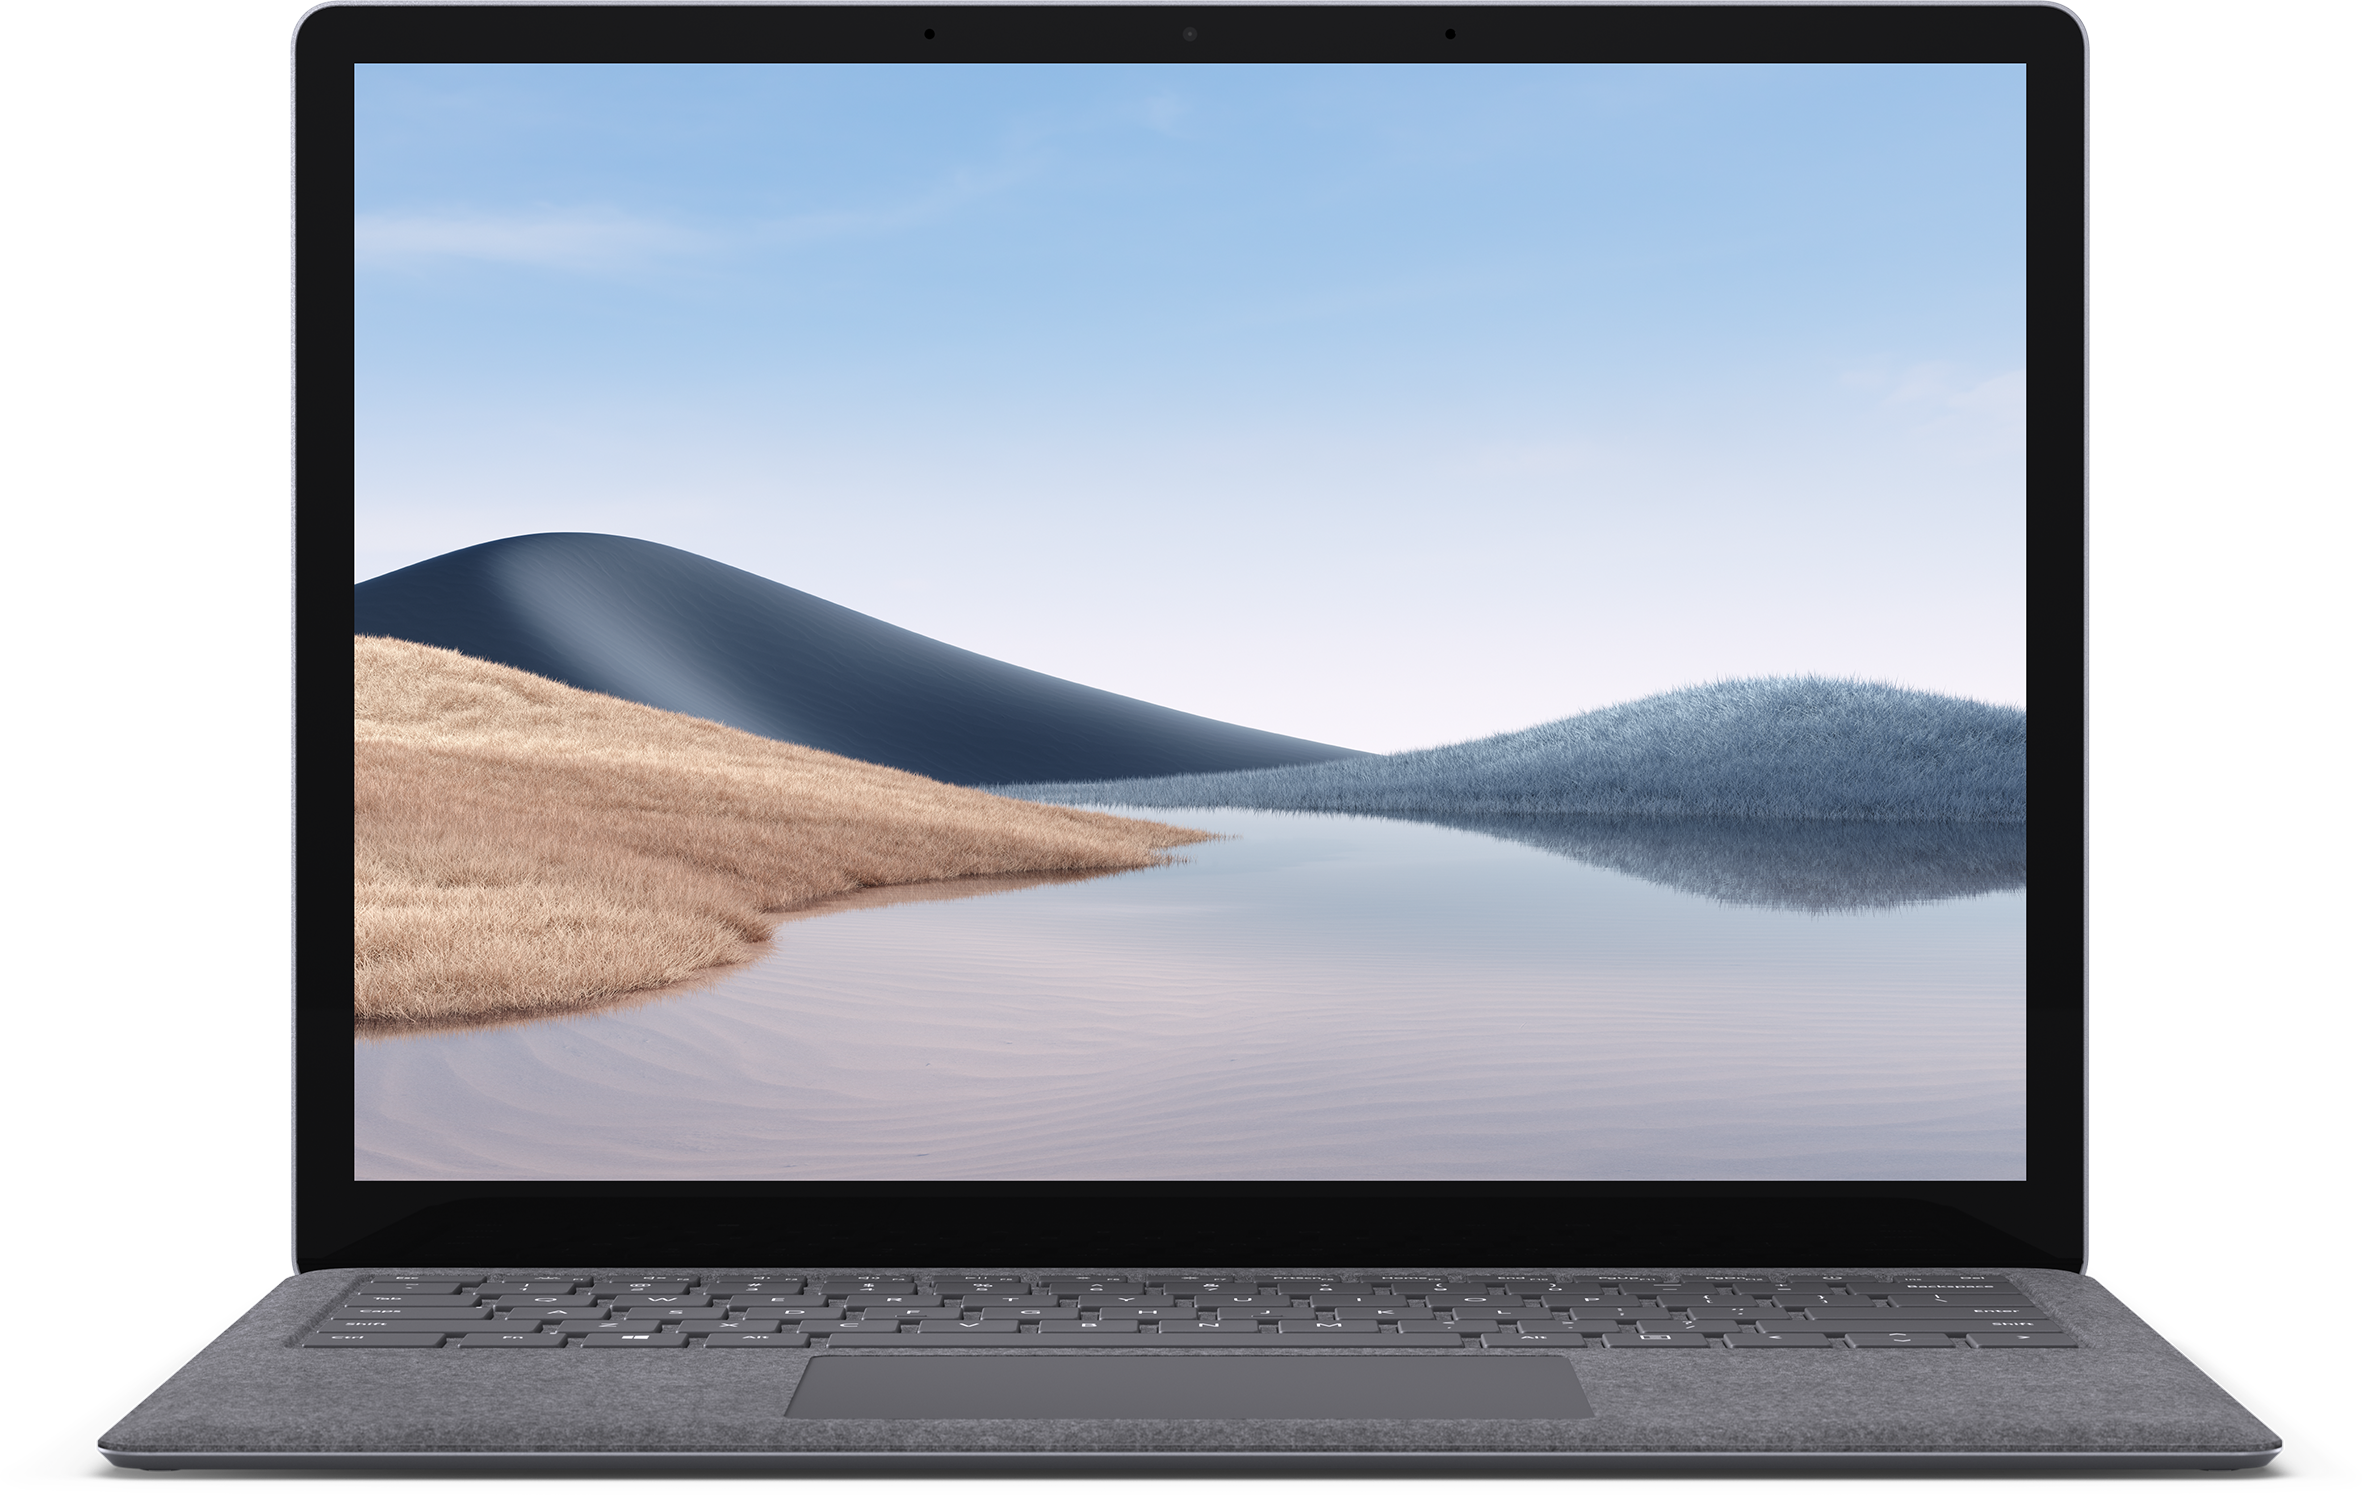 Surface Laptop 4 for Business - 13.5", Platinum (Alcantara), AMD Ryzen 5 4680U, 8GB RAM, 256GB SSD (Certified Refurbished)